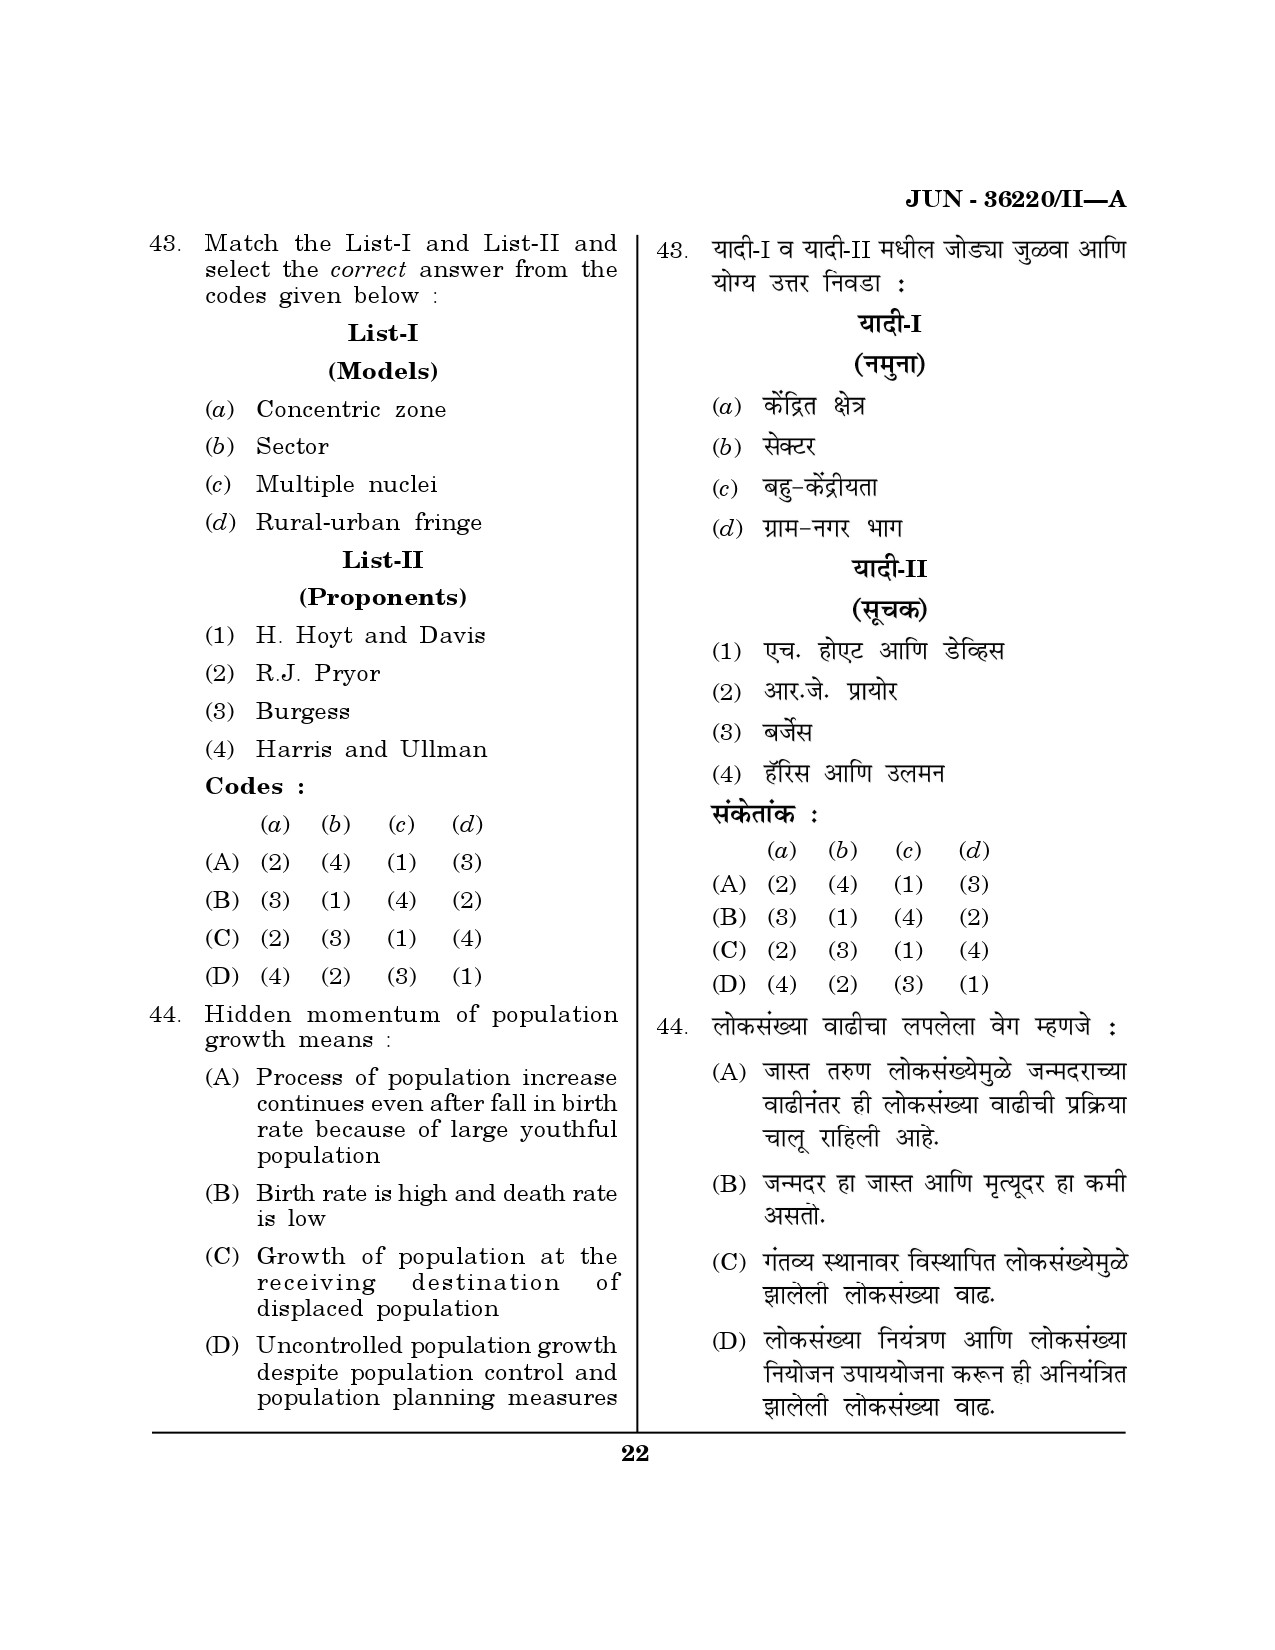 Maharashtra SET Geography Question Paper II June 2020 21